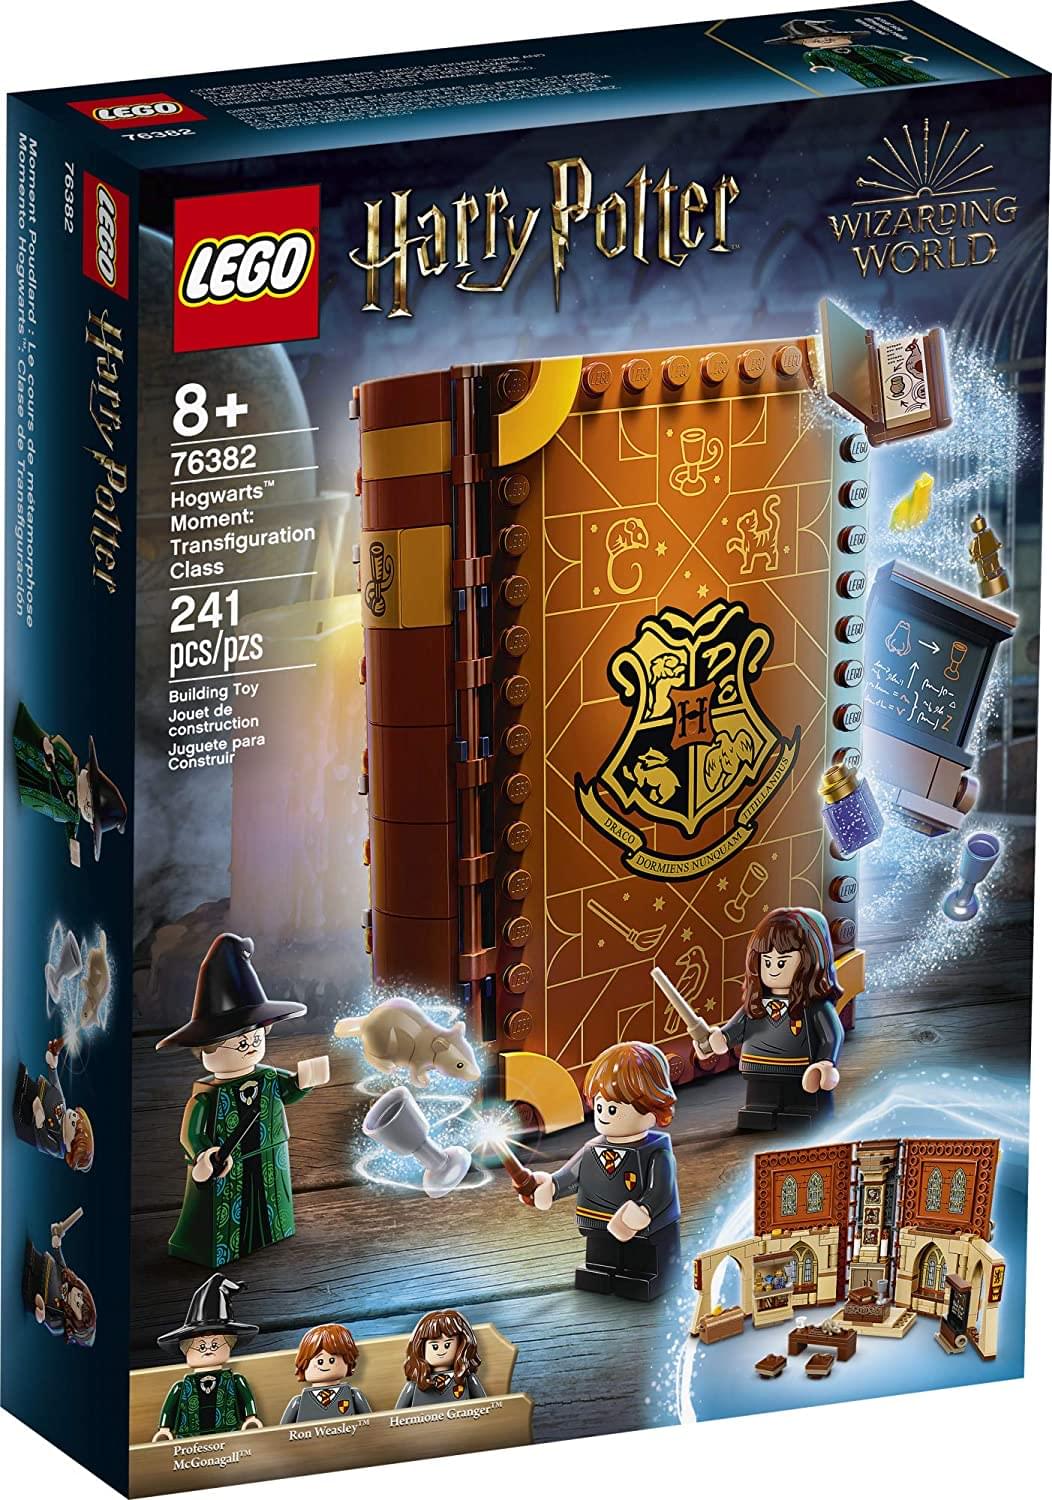 LEGO Harry Potter 76382 Hogwarts Moment: Transfiguration Class Building Kit